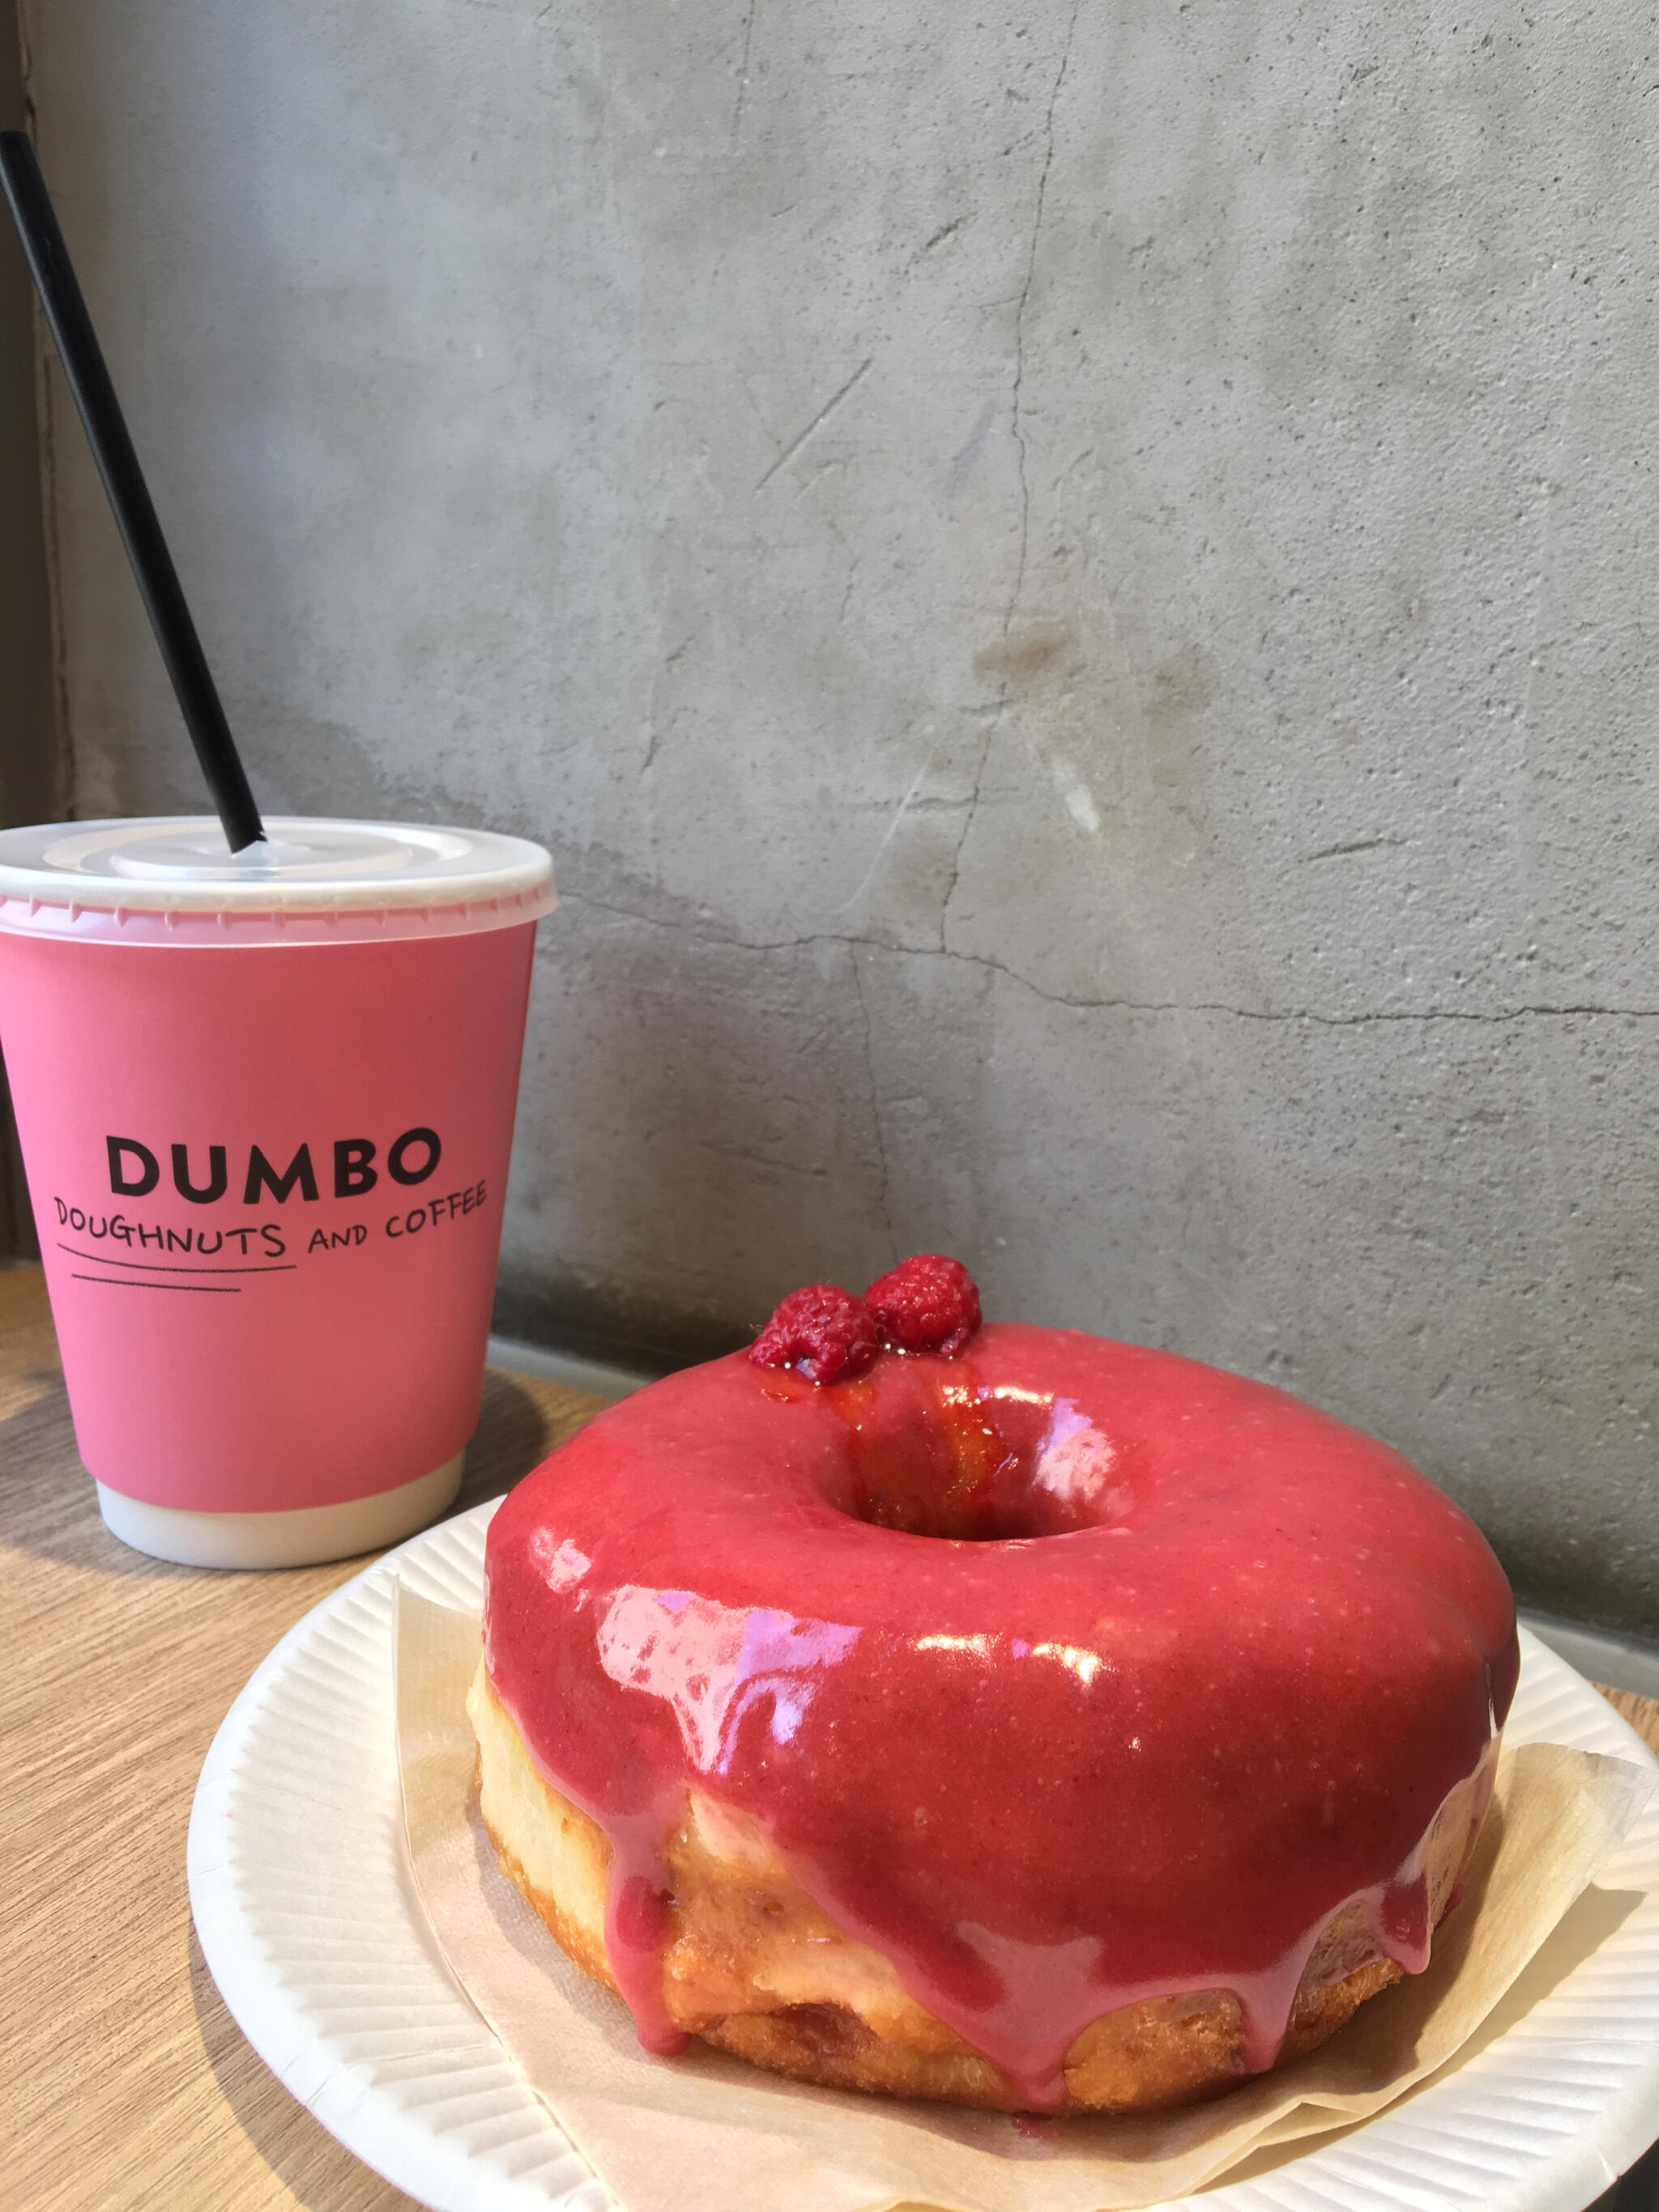 DUMBO Doughnuts and Coffeeの代表写真2